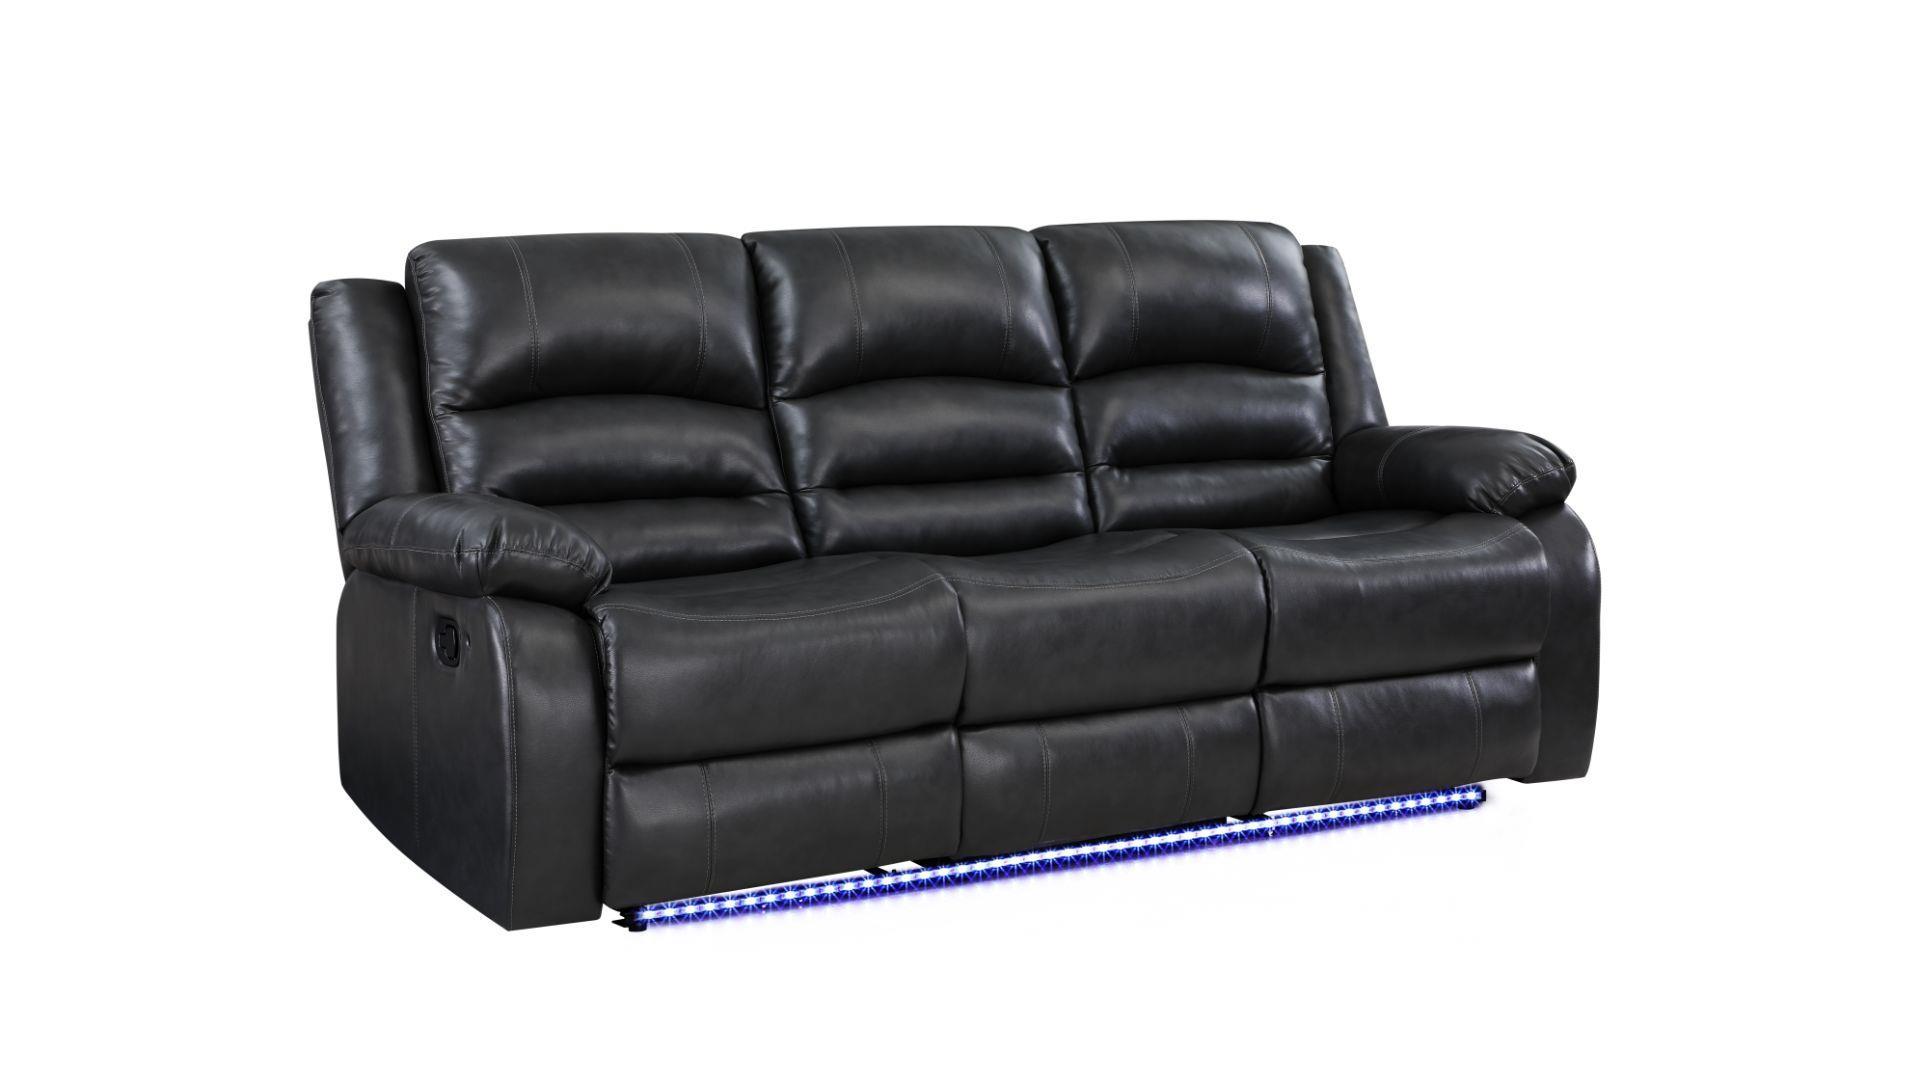 Contemporary, Modern Recliner Sofa MARTIN BK MARTIN-BK-S in Black Faux Leather